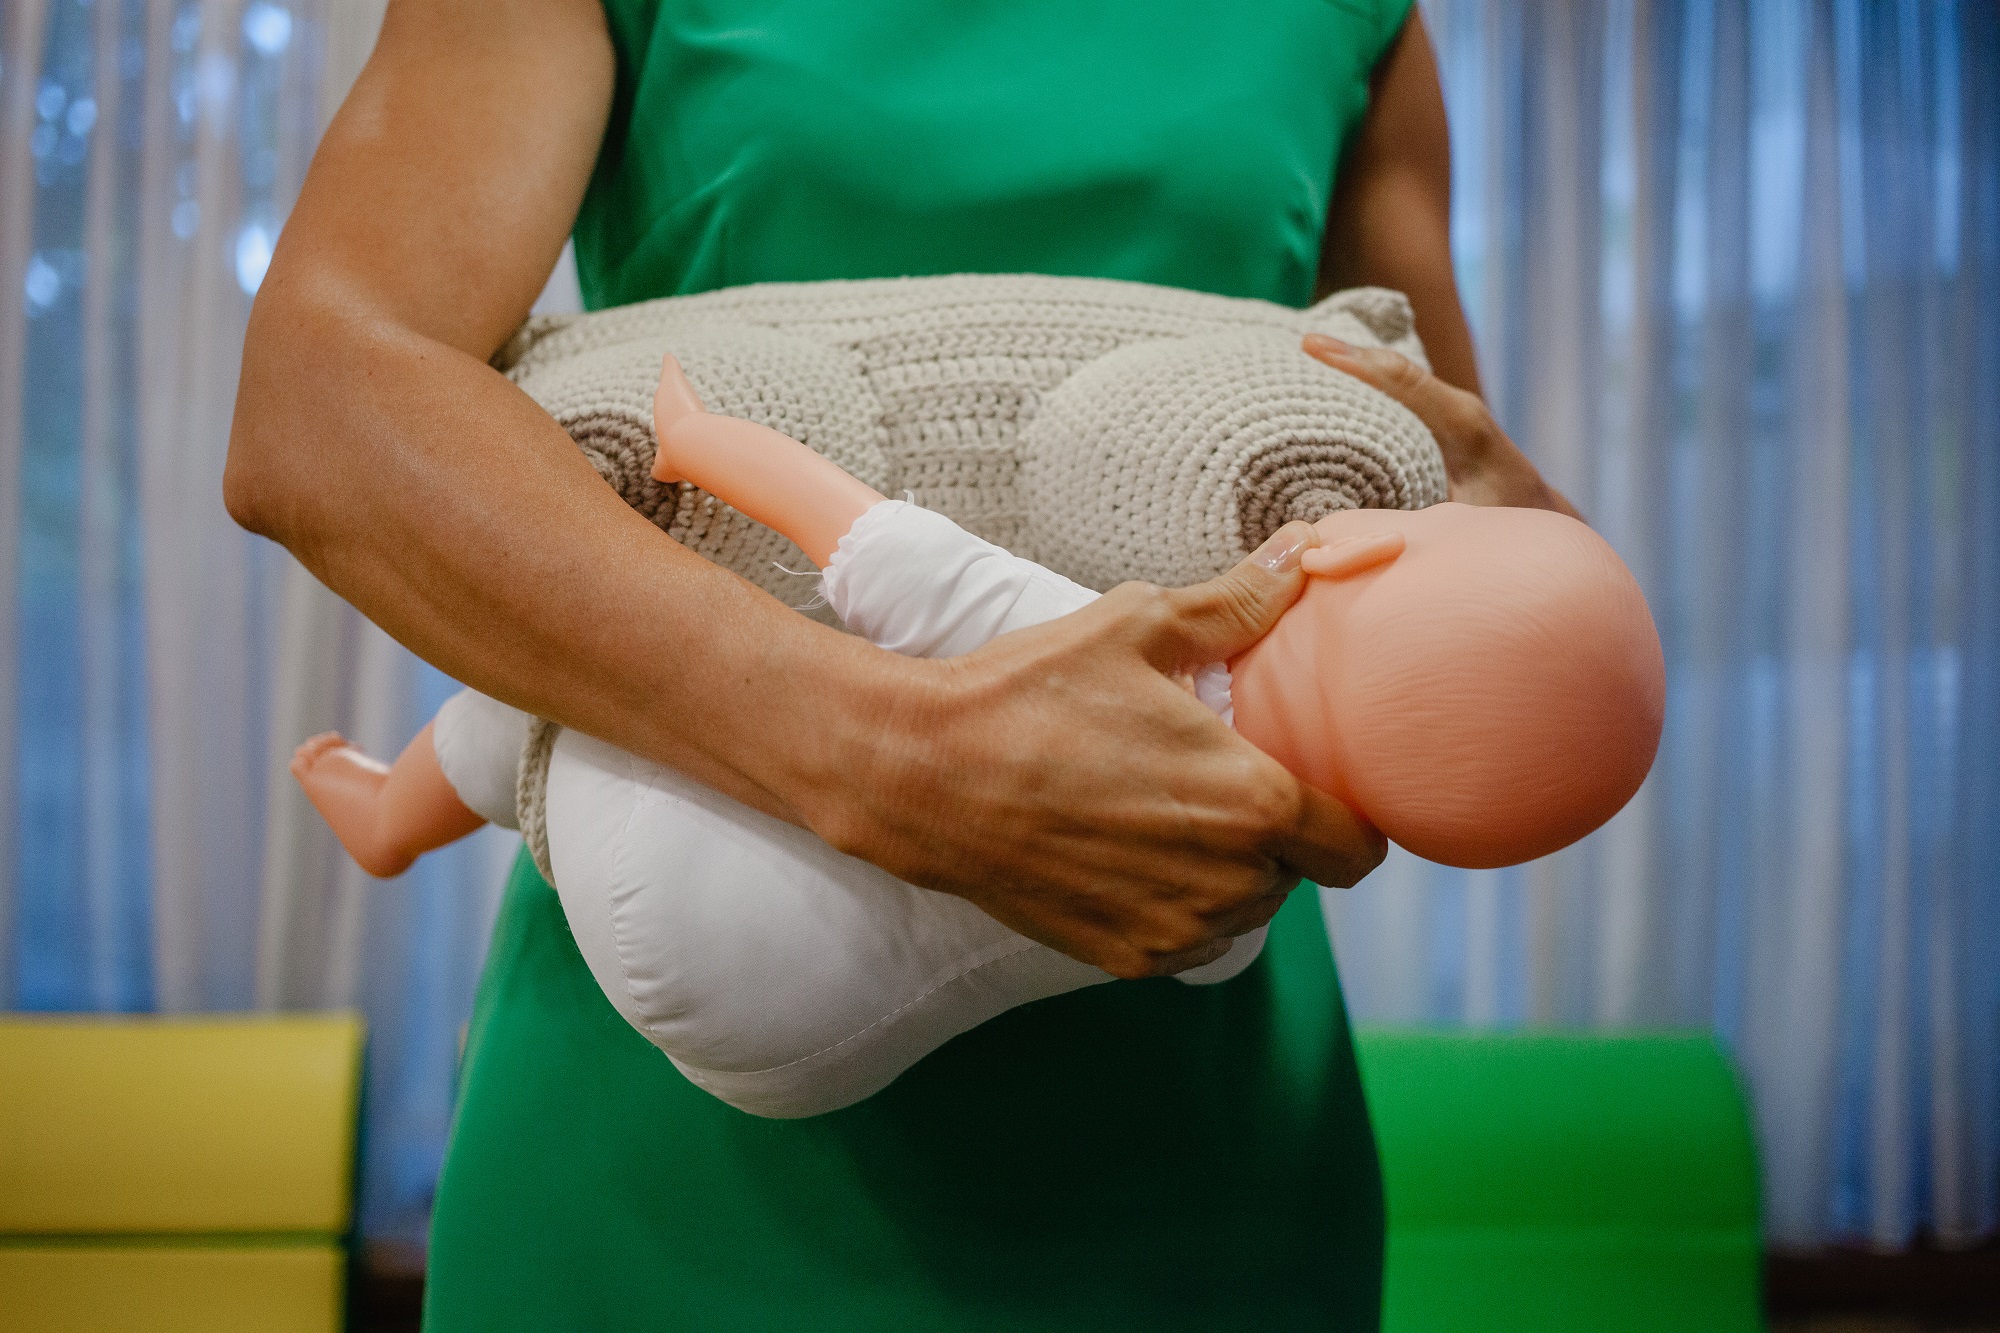 Breastfeeding class